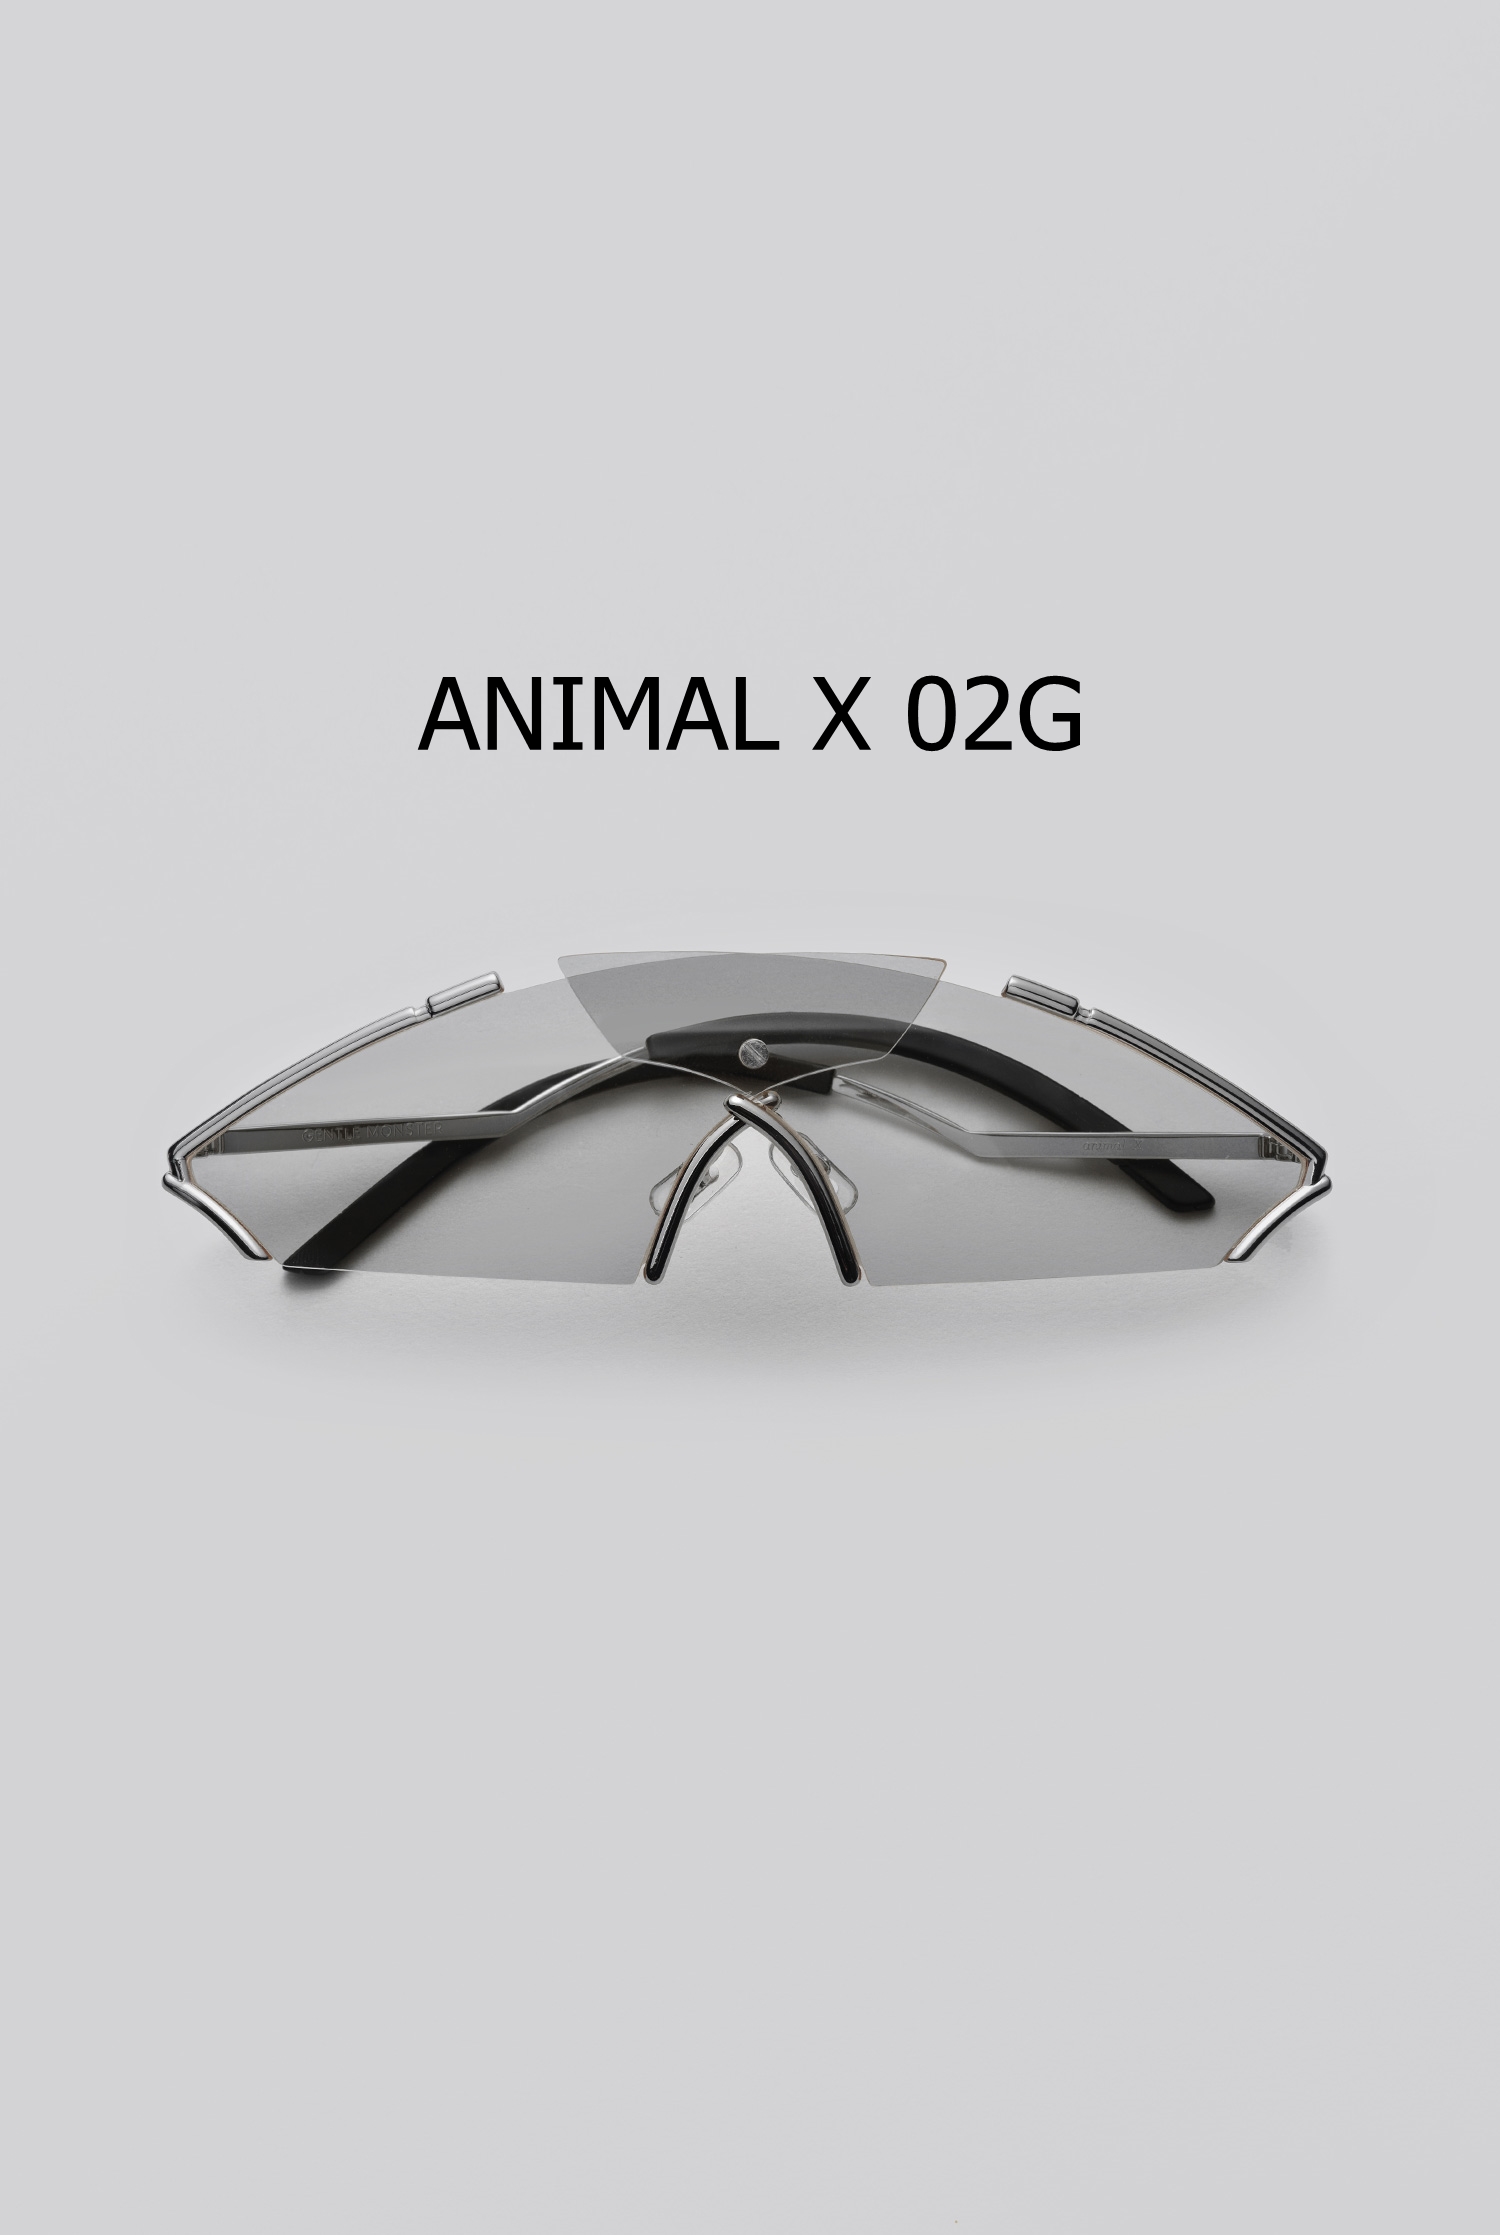 ANIMAL X 02G